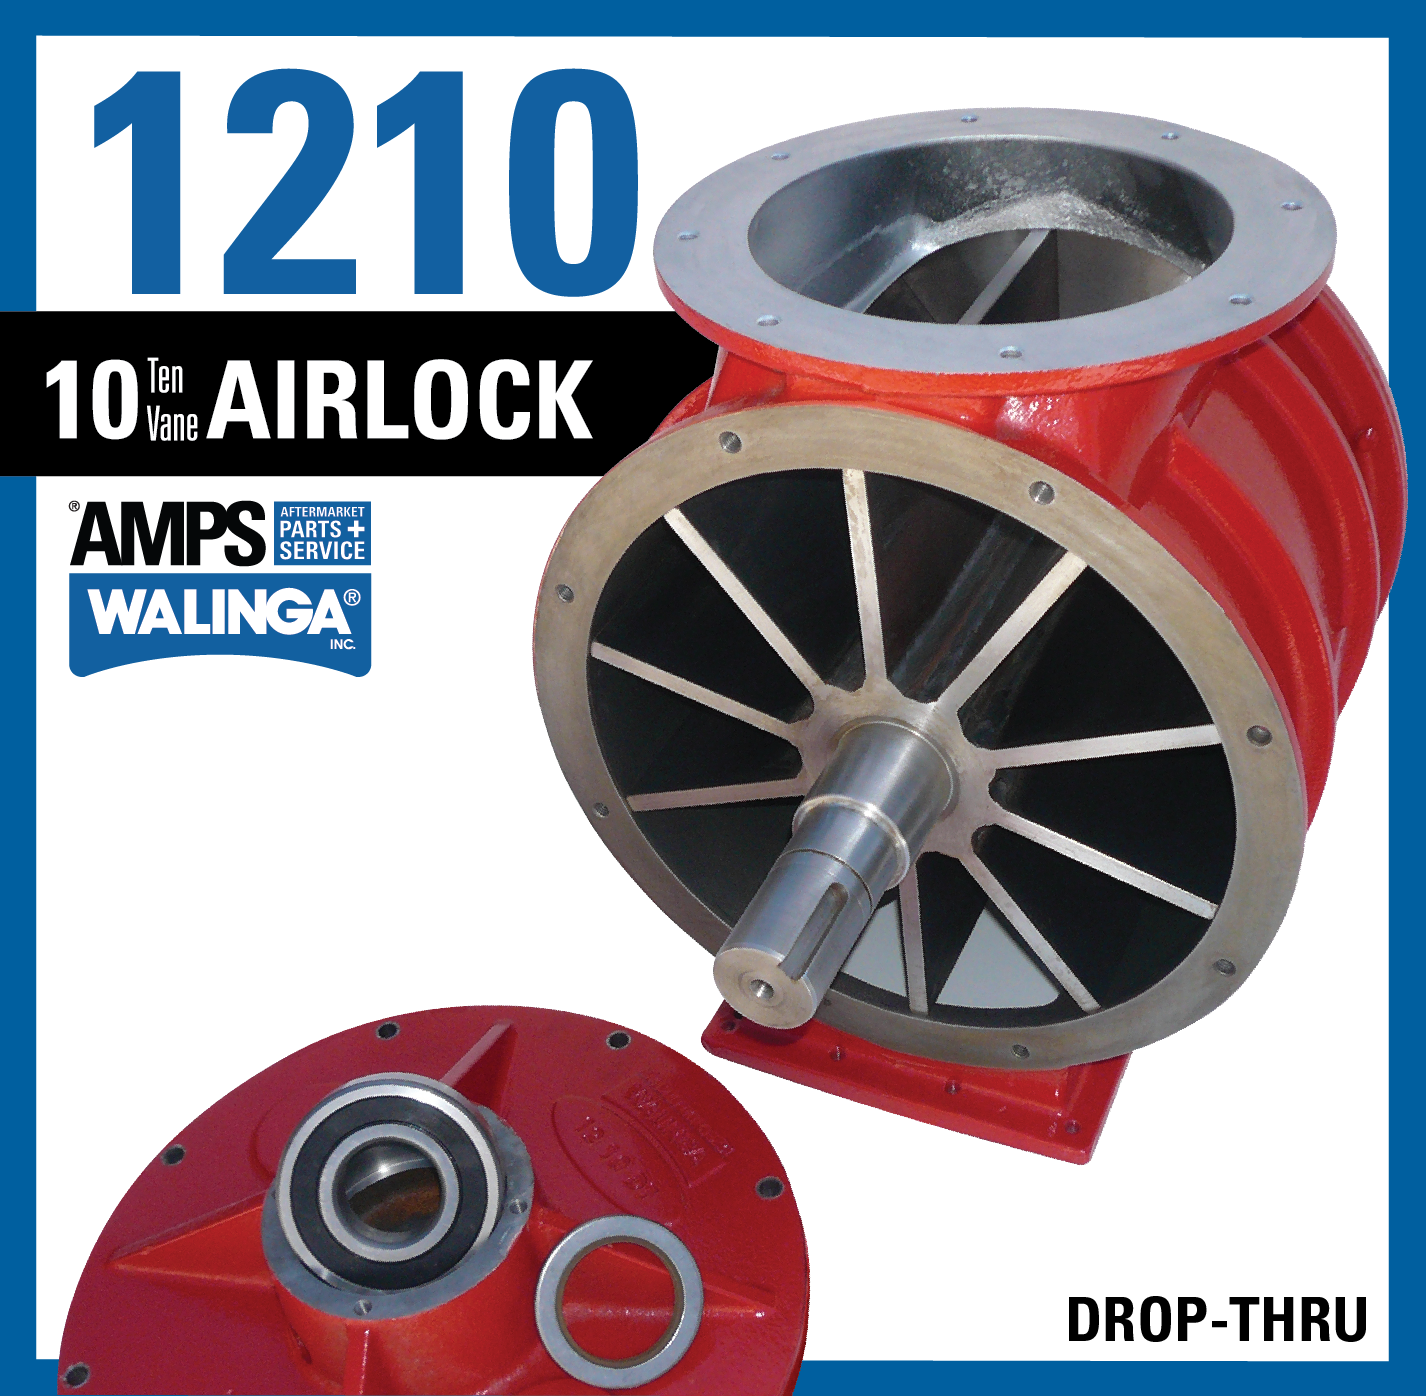 1210 Drop Thru Airlock